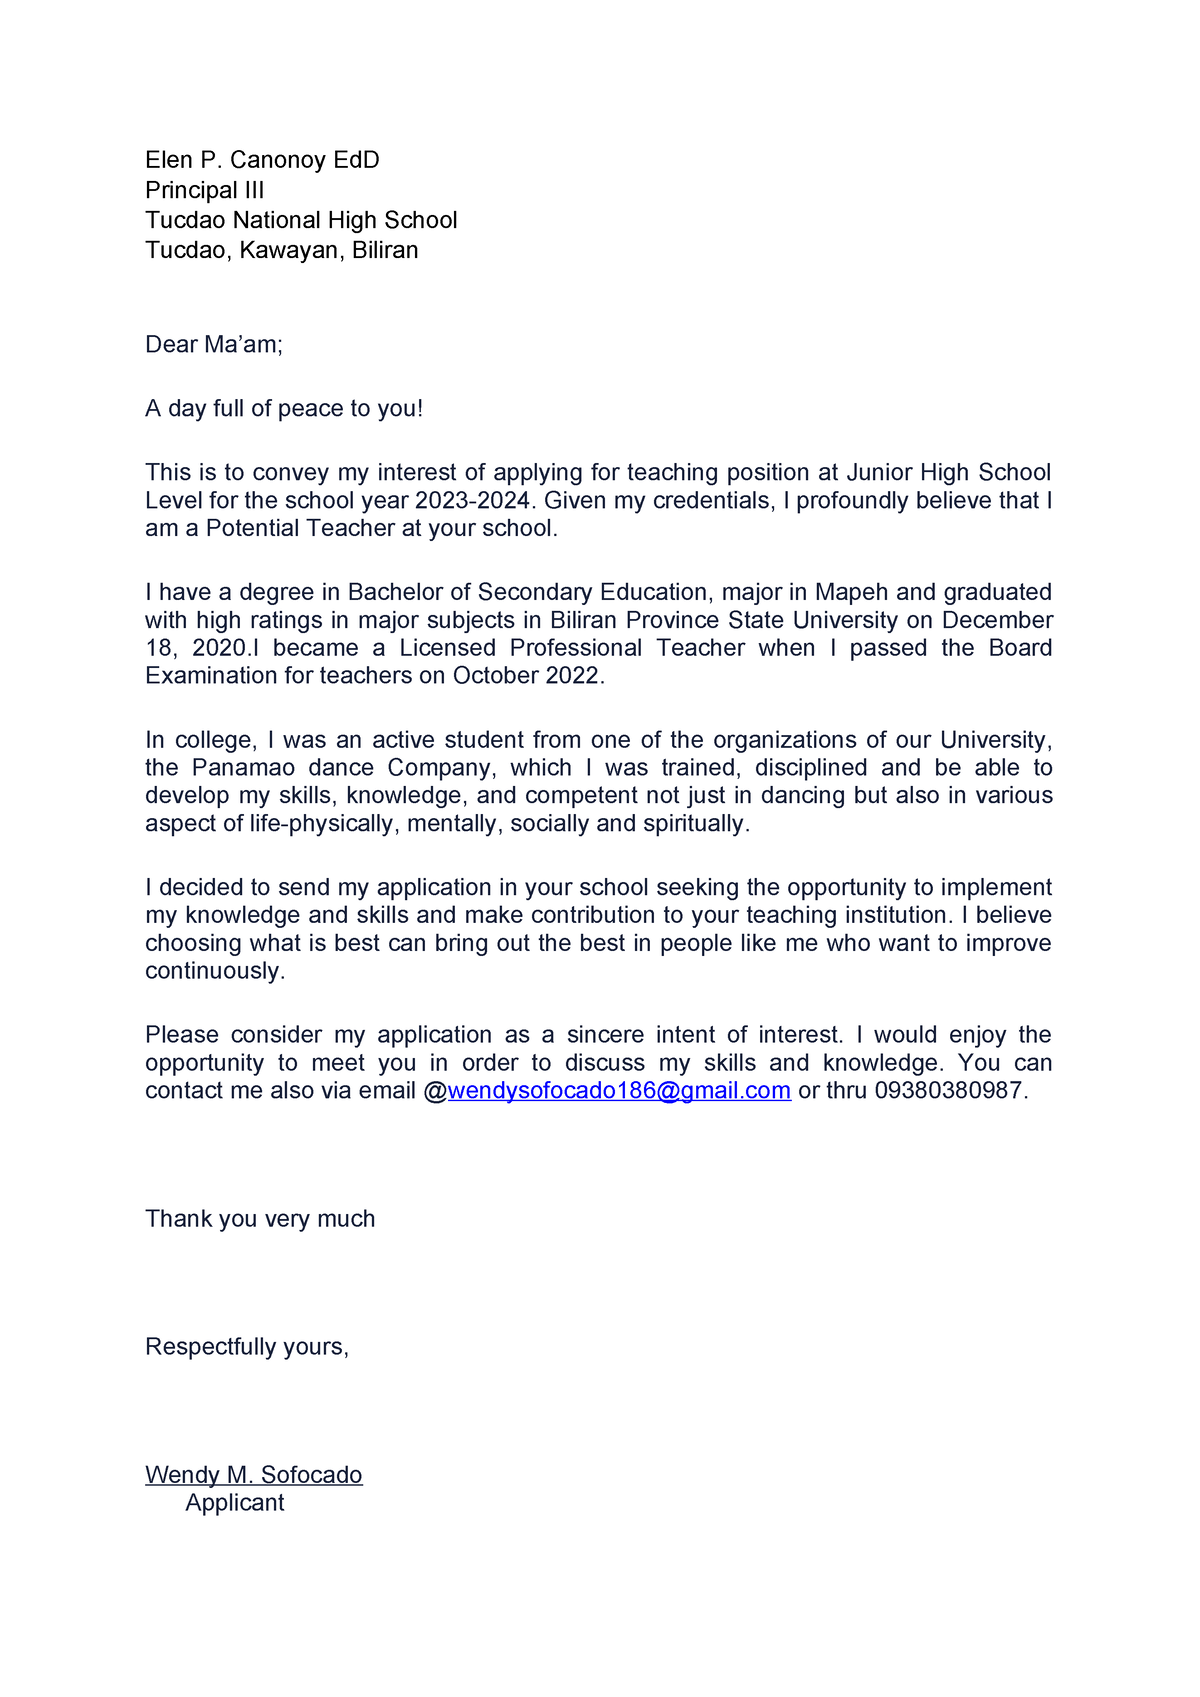 Application letter wendy - Elen P. Canonoy EdD Principal III Tucdao ...